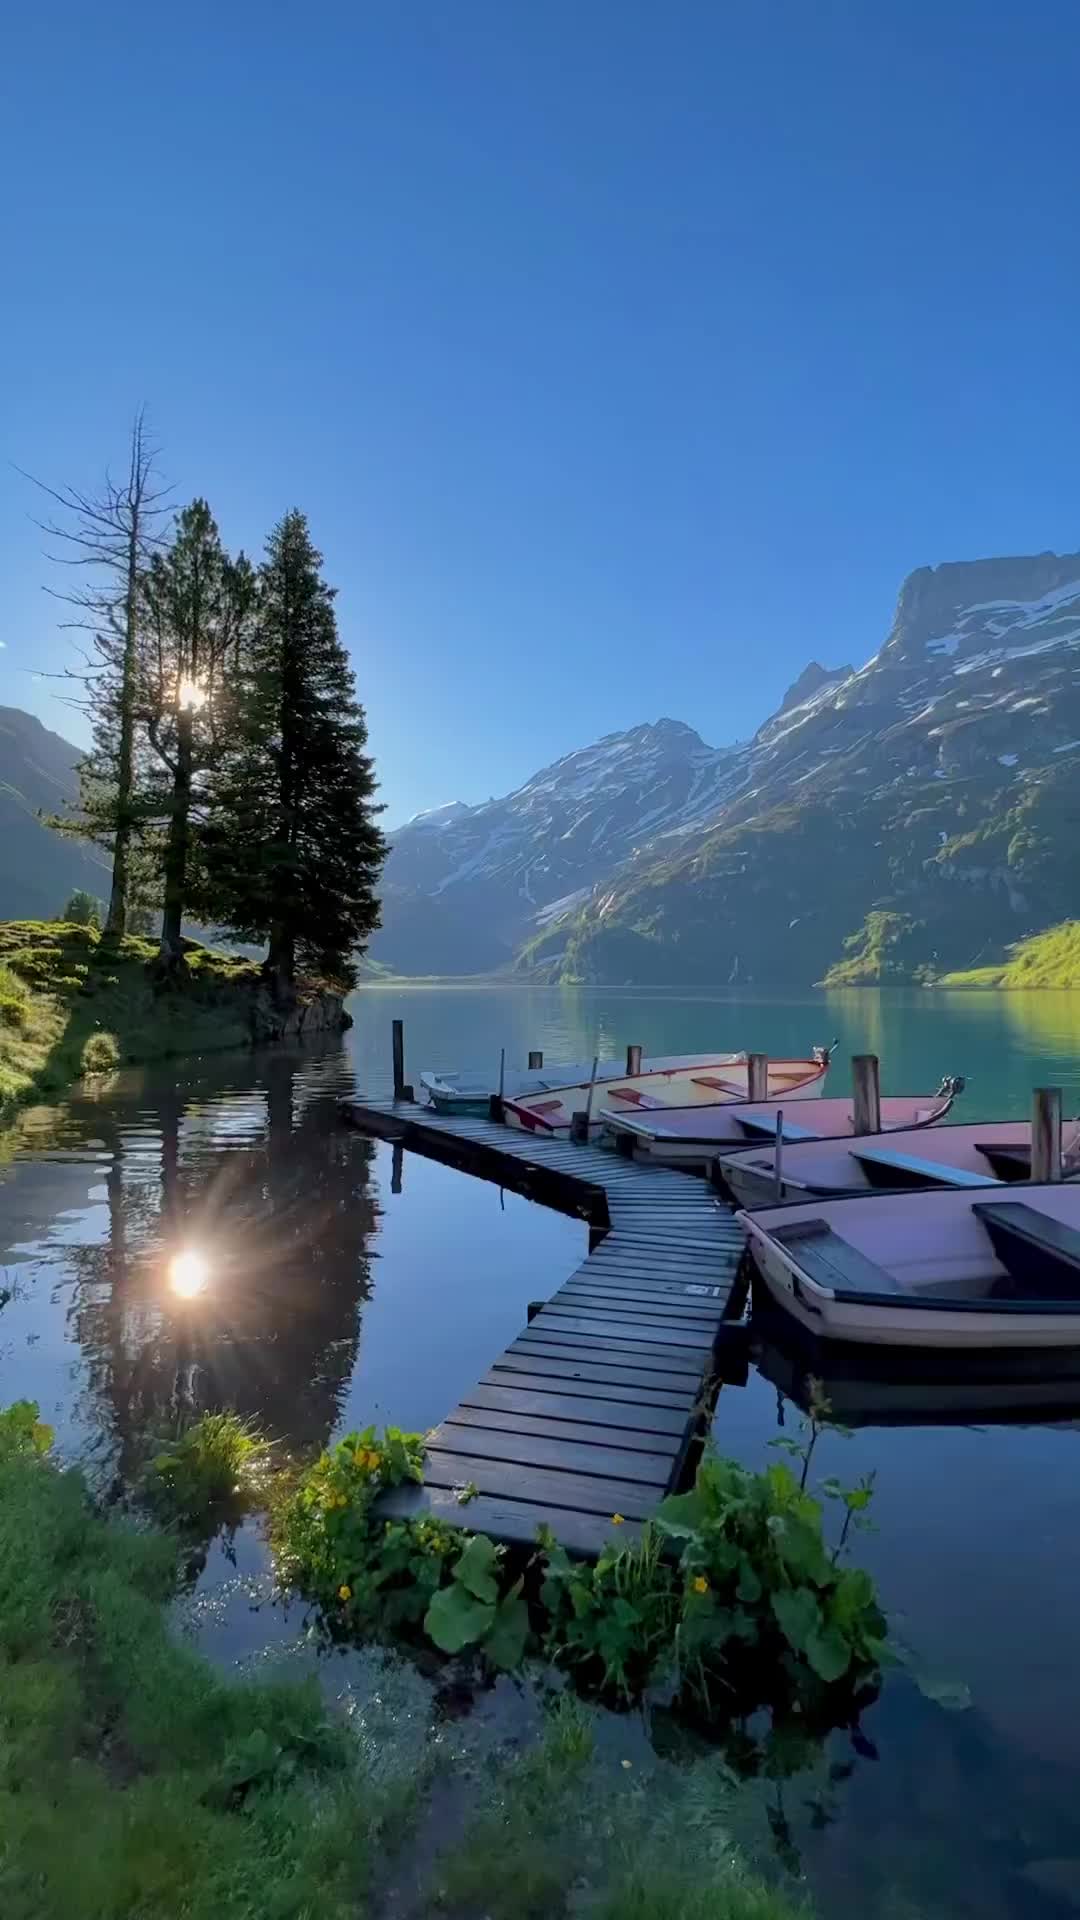 Nature of Switzerland: Scenic Beauty in Kanton Bern